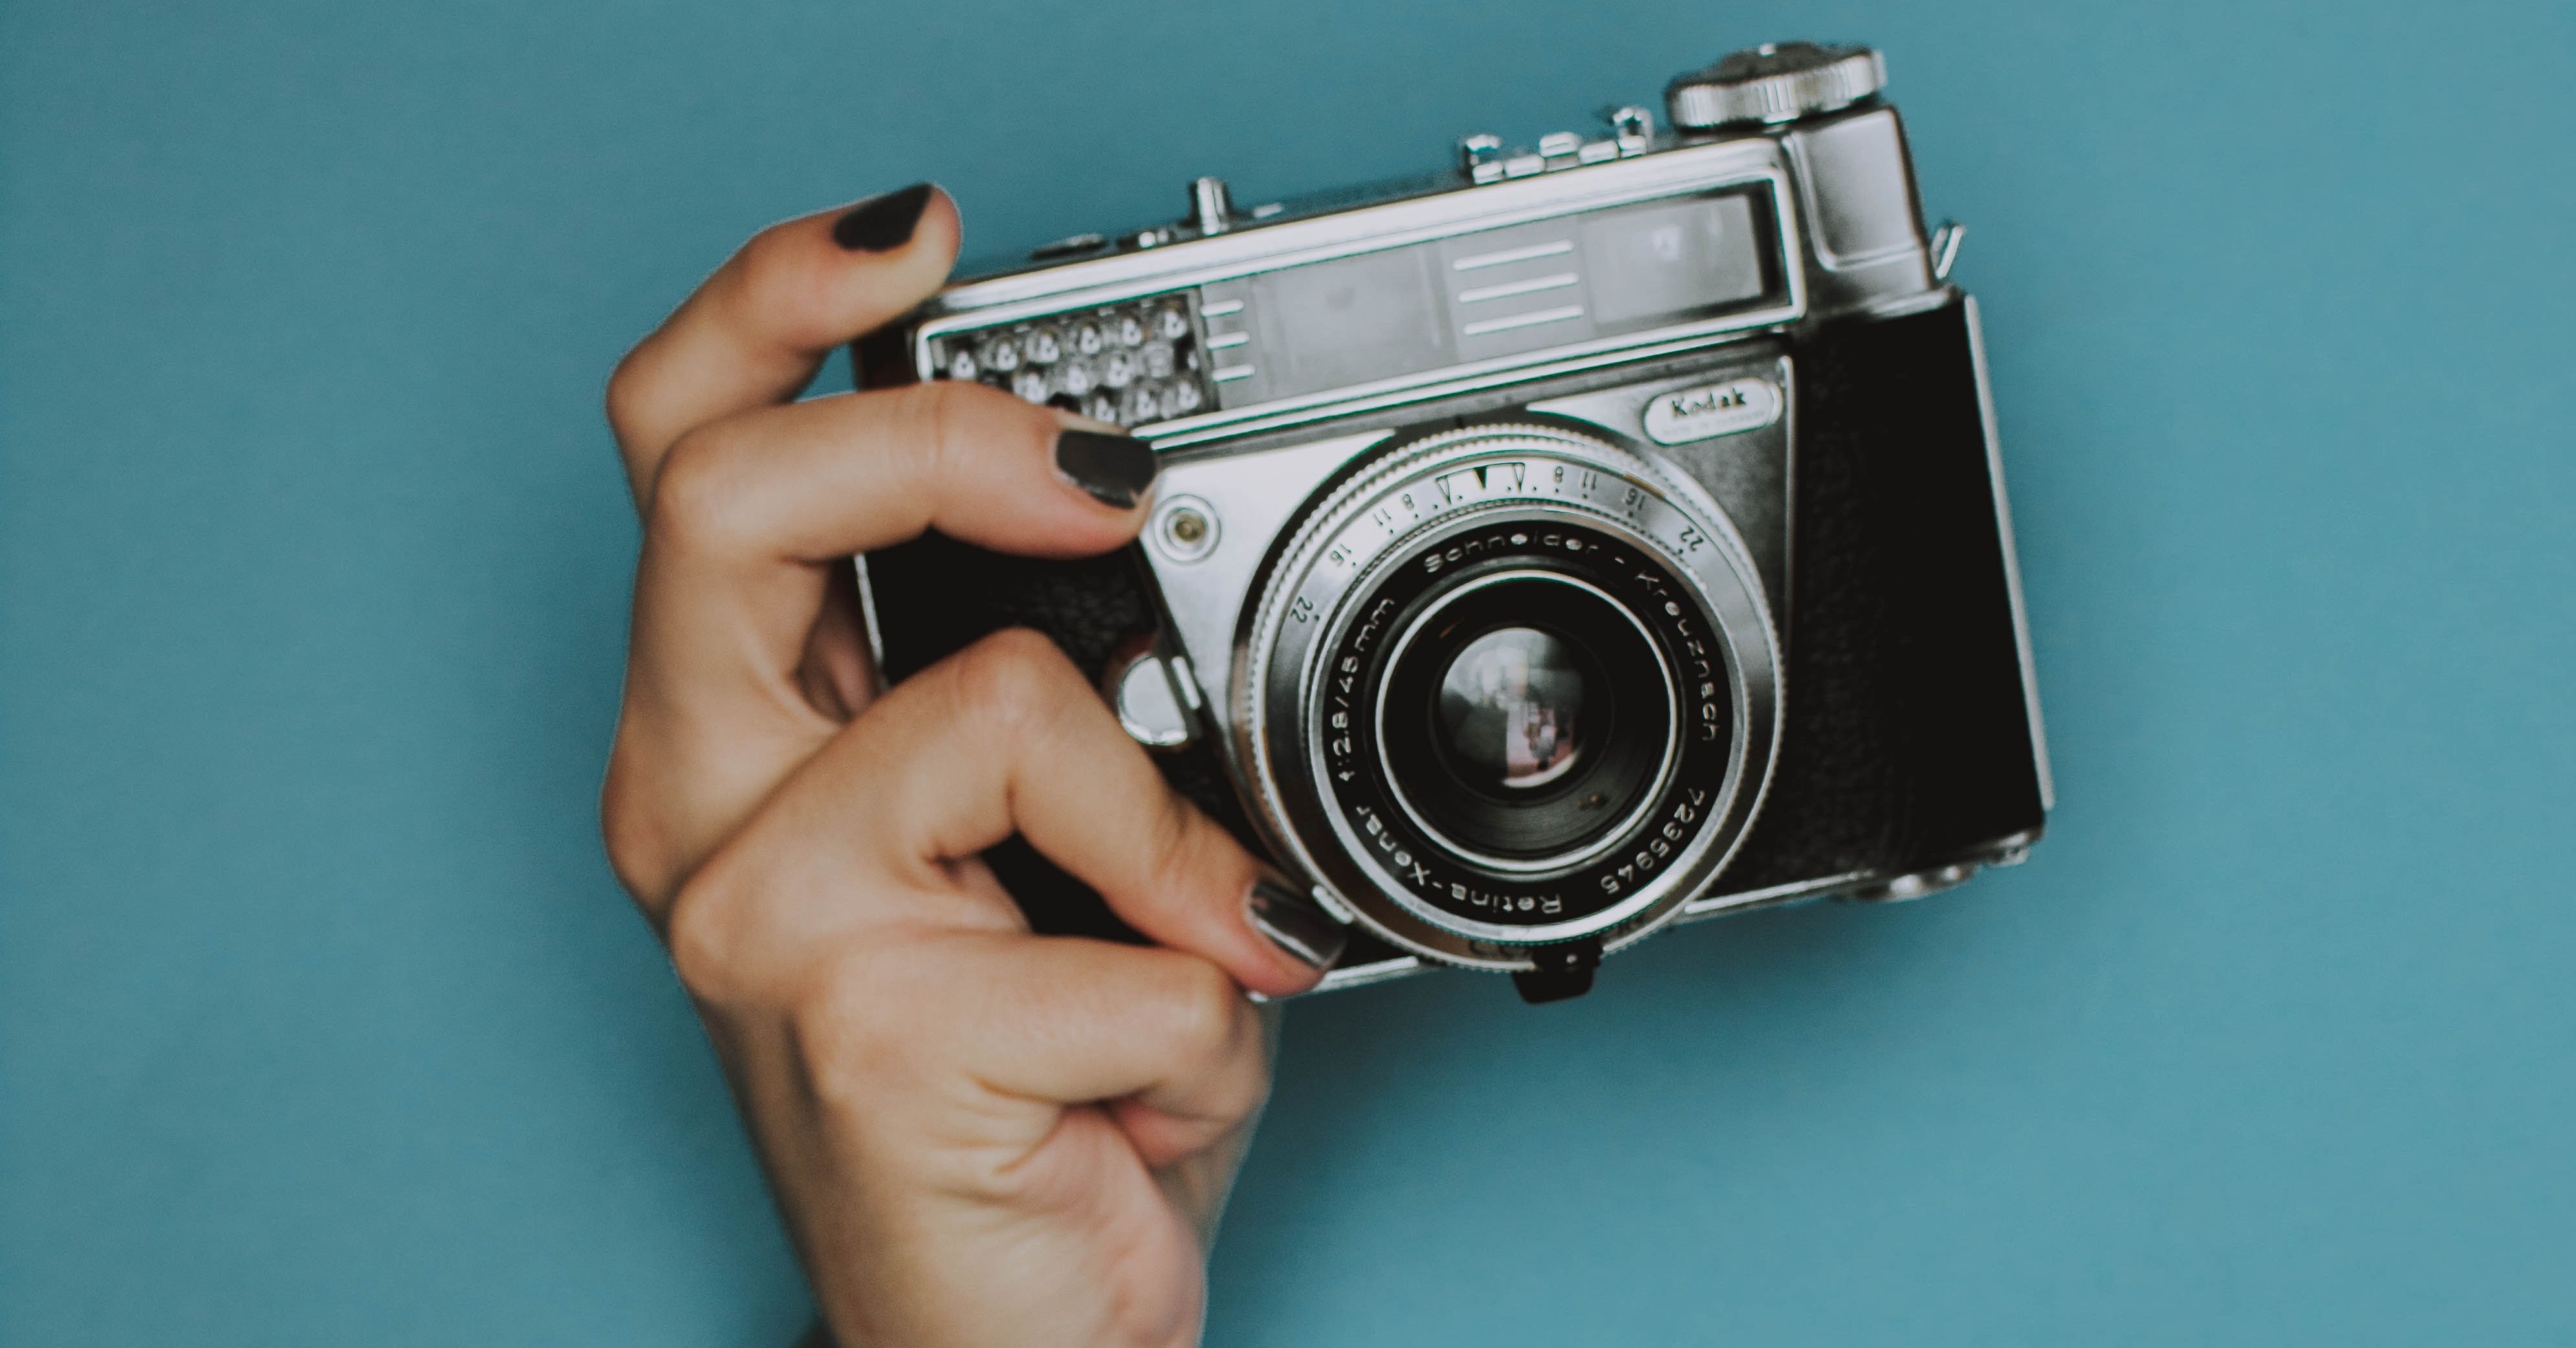 woman holding vintage camera